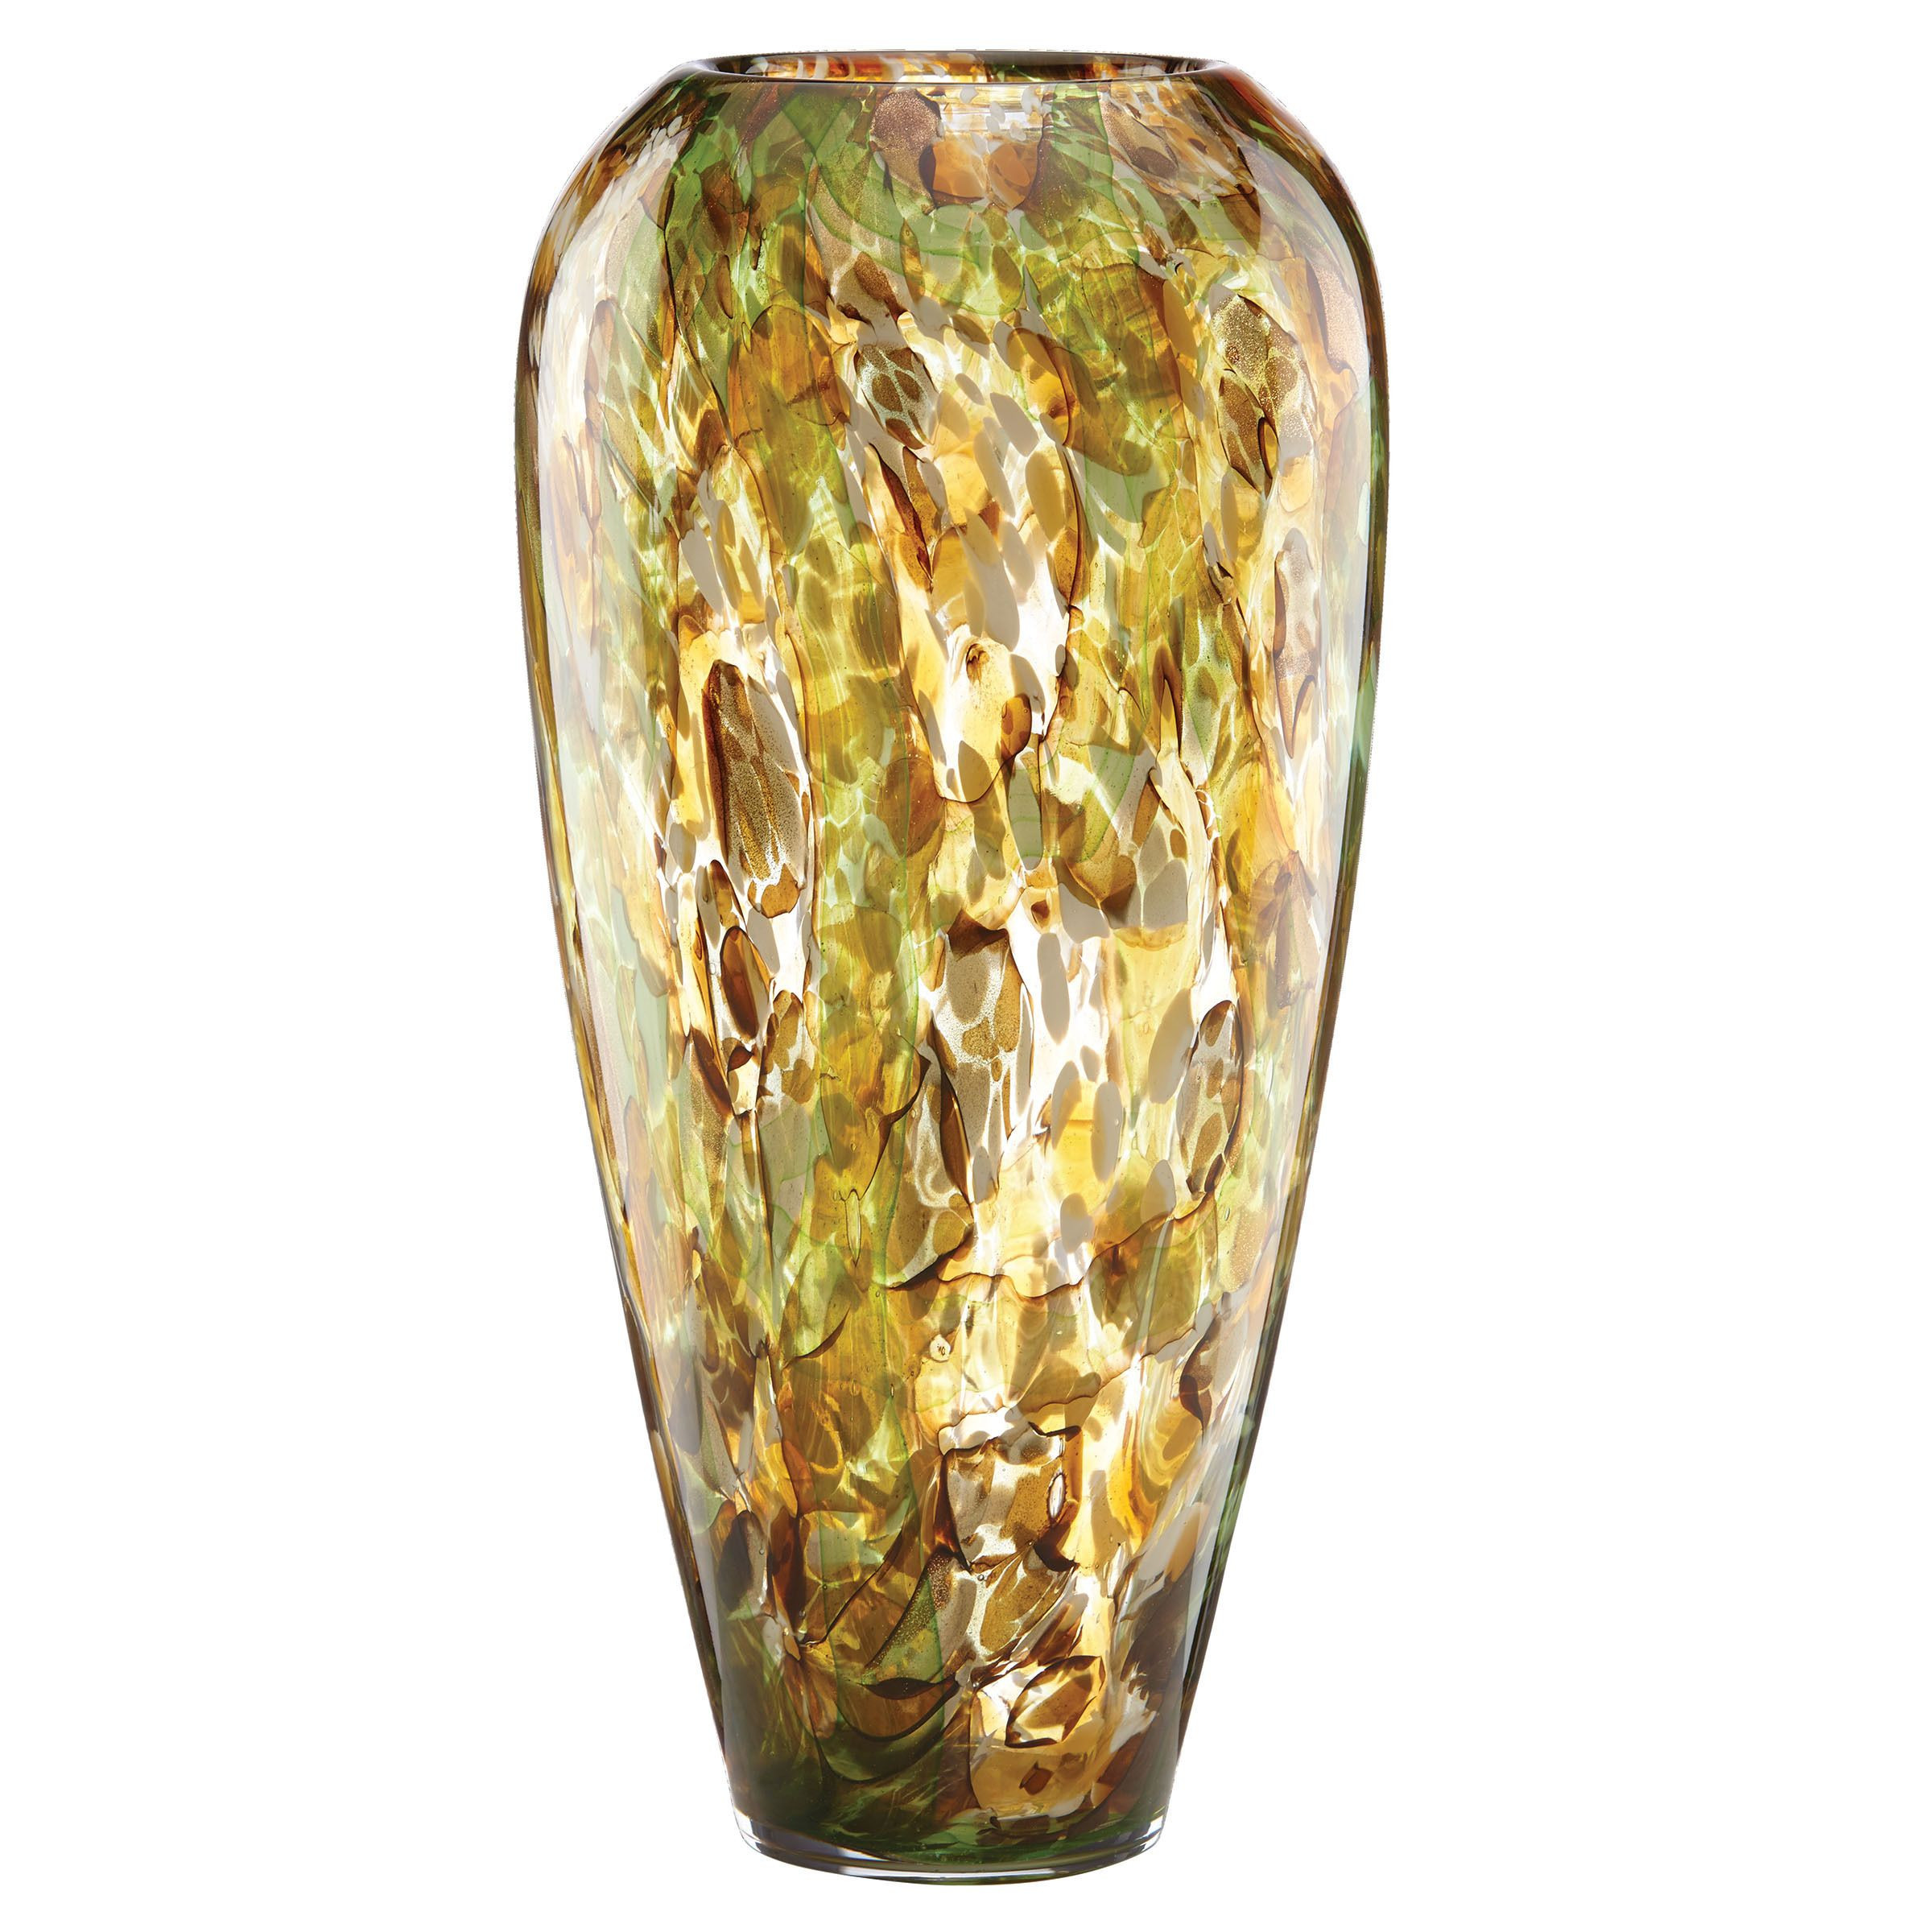 lenox lead crystal vase of lenox seaview tortoise green glass urn vase seaview art glass within lenox seaview tortoise glass urn vase seaview art glass tortoise urn vase gold crystal